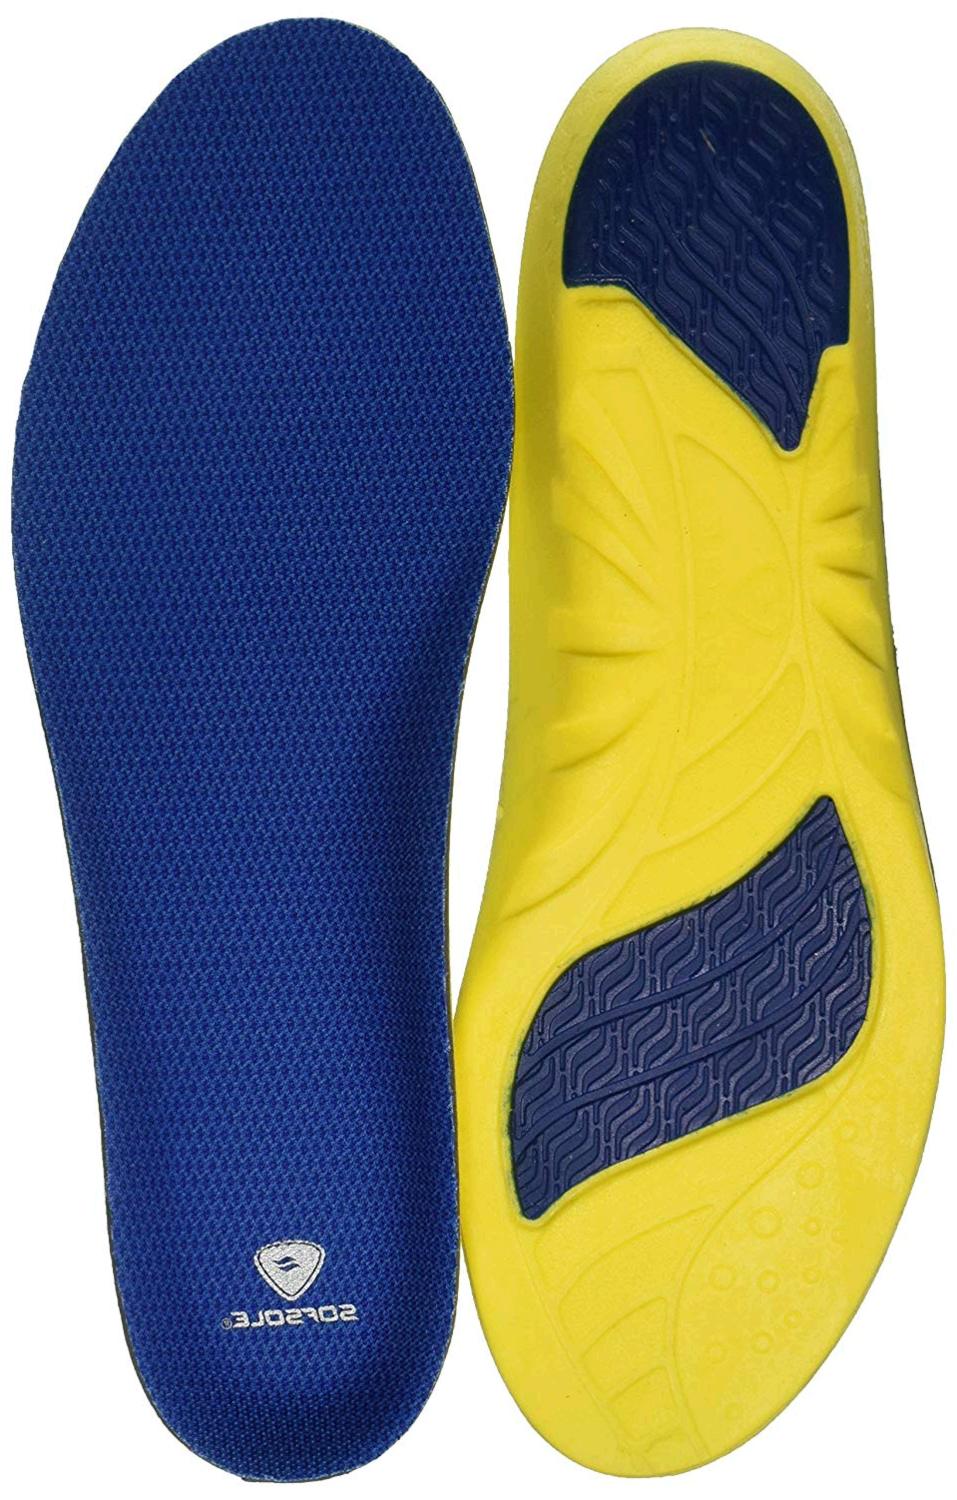 sof-sole-insoles-men-s-athlete-performance-full-length-gel-shoe-blue